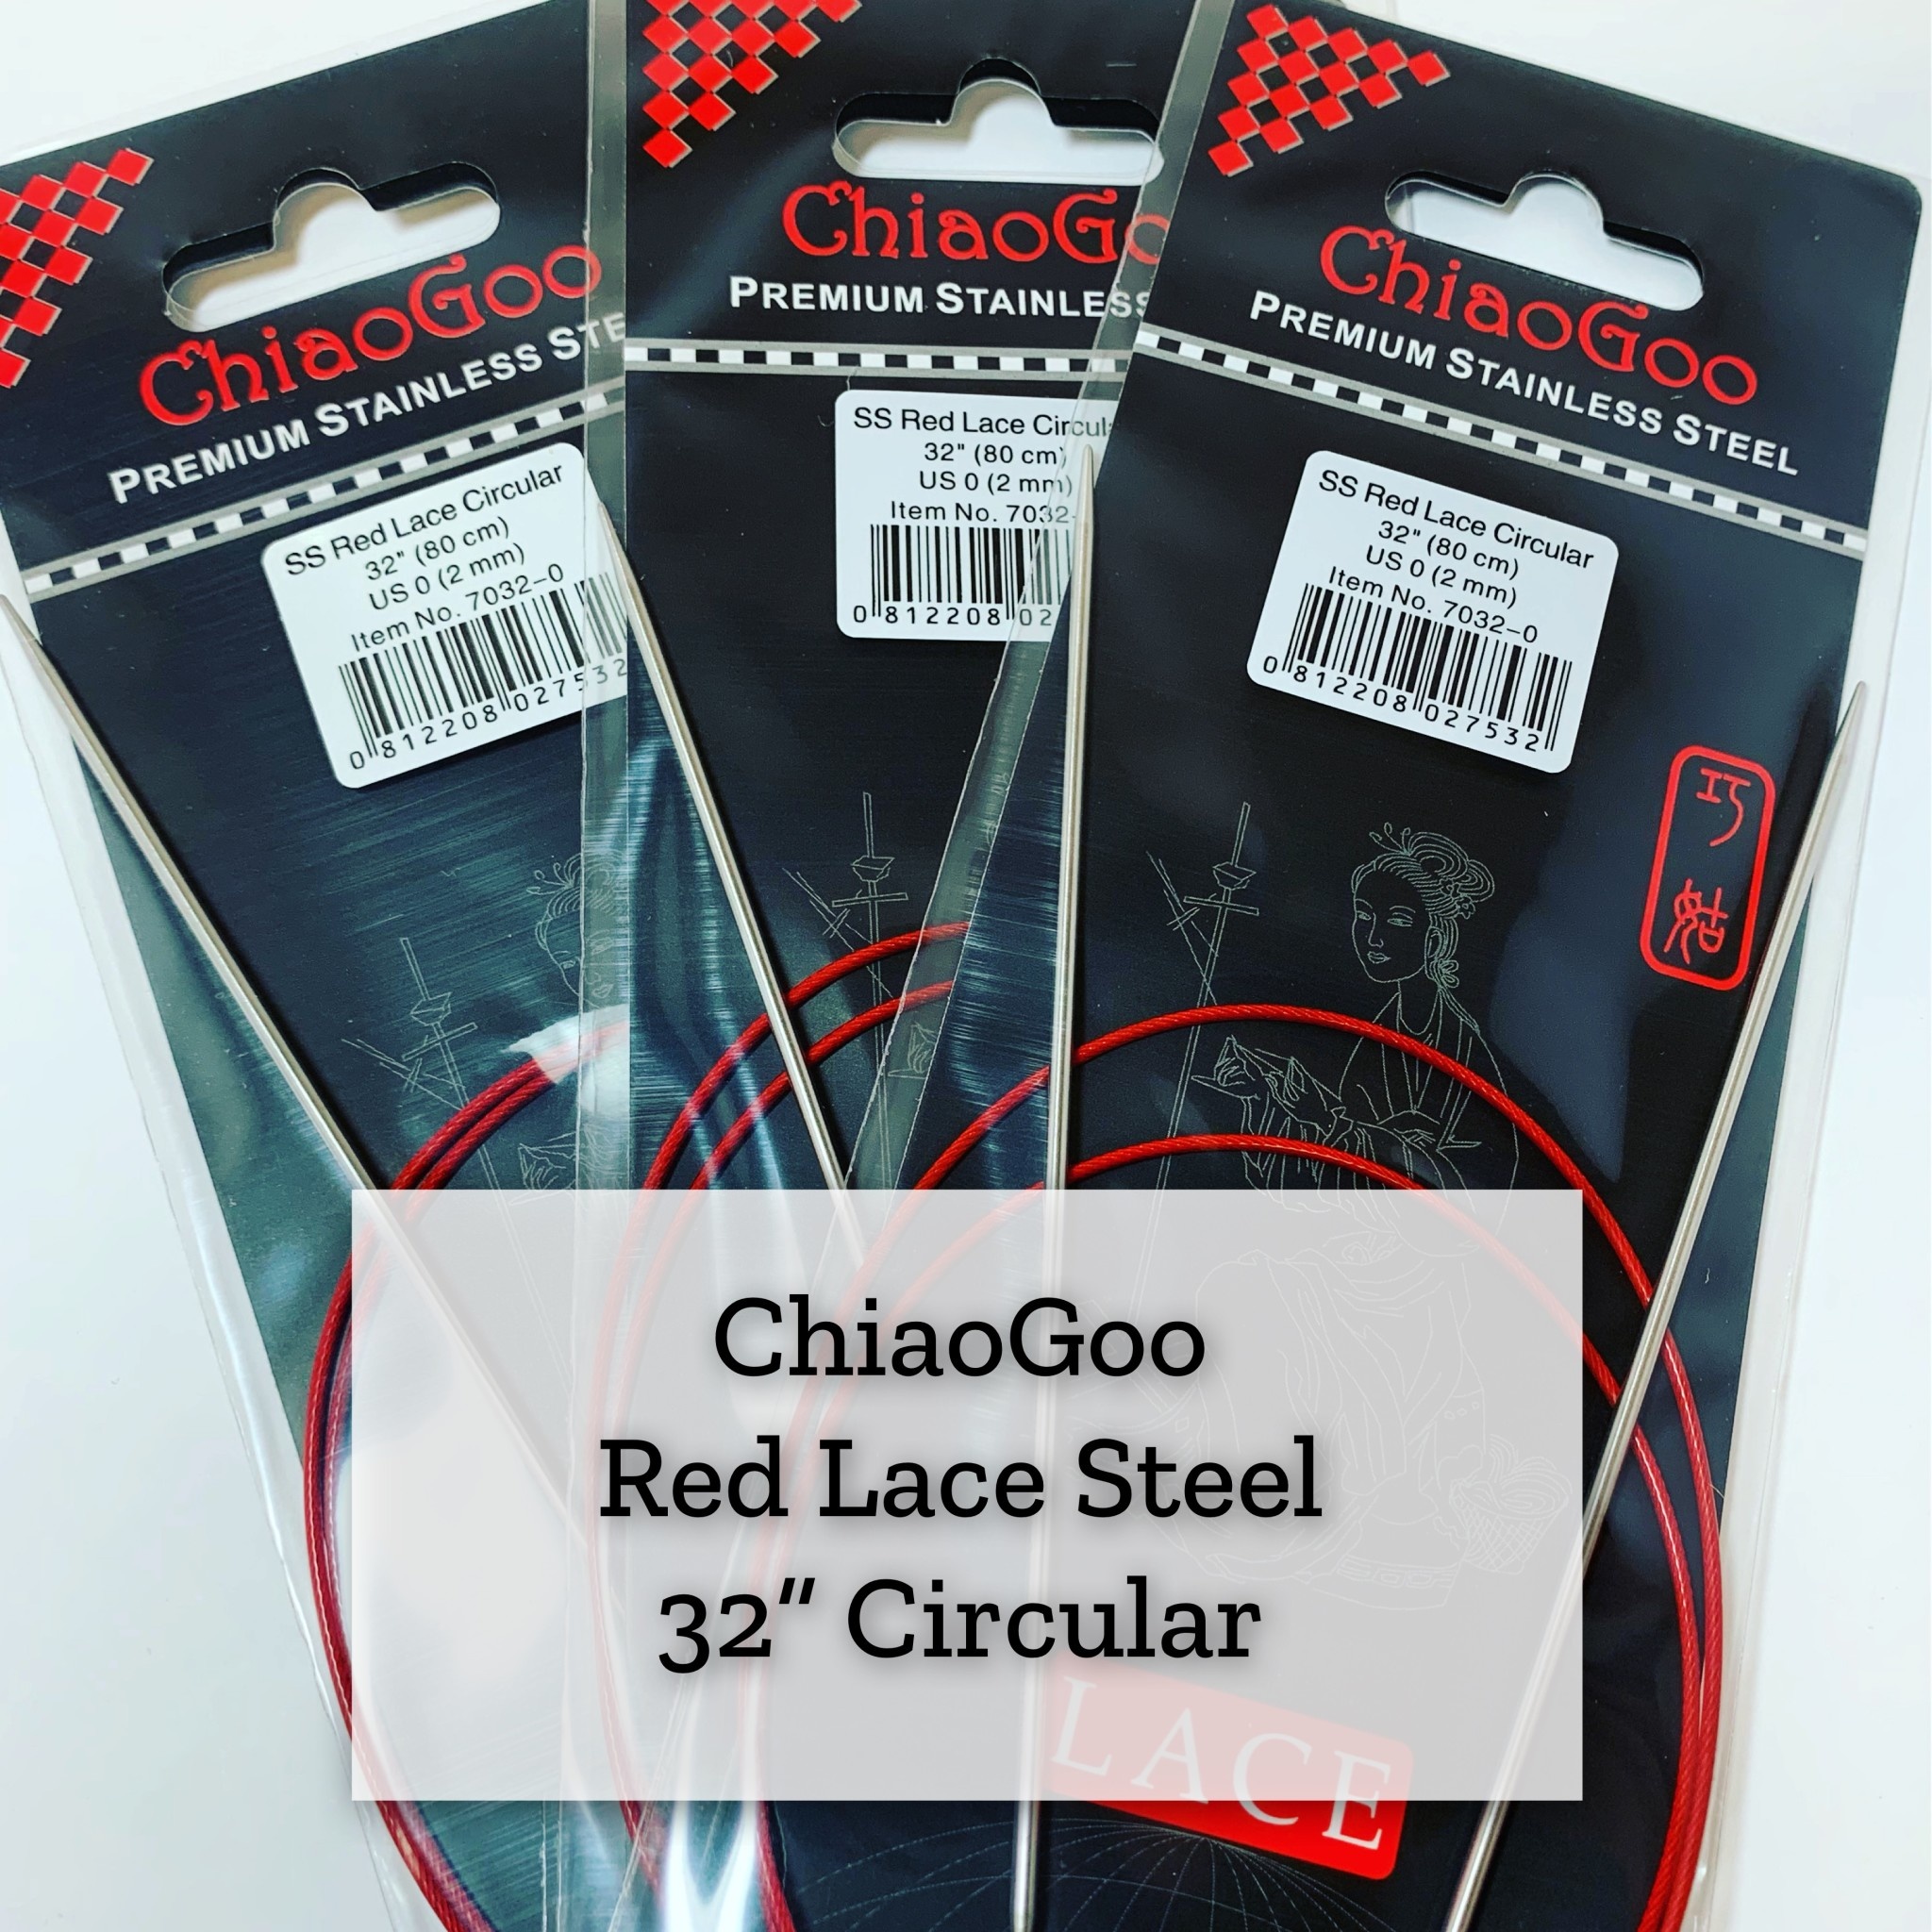 ChiaoGoo Red Lace Steel - 32" 2 mm